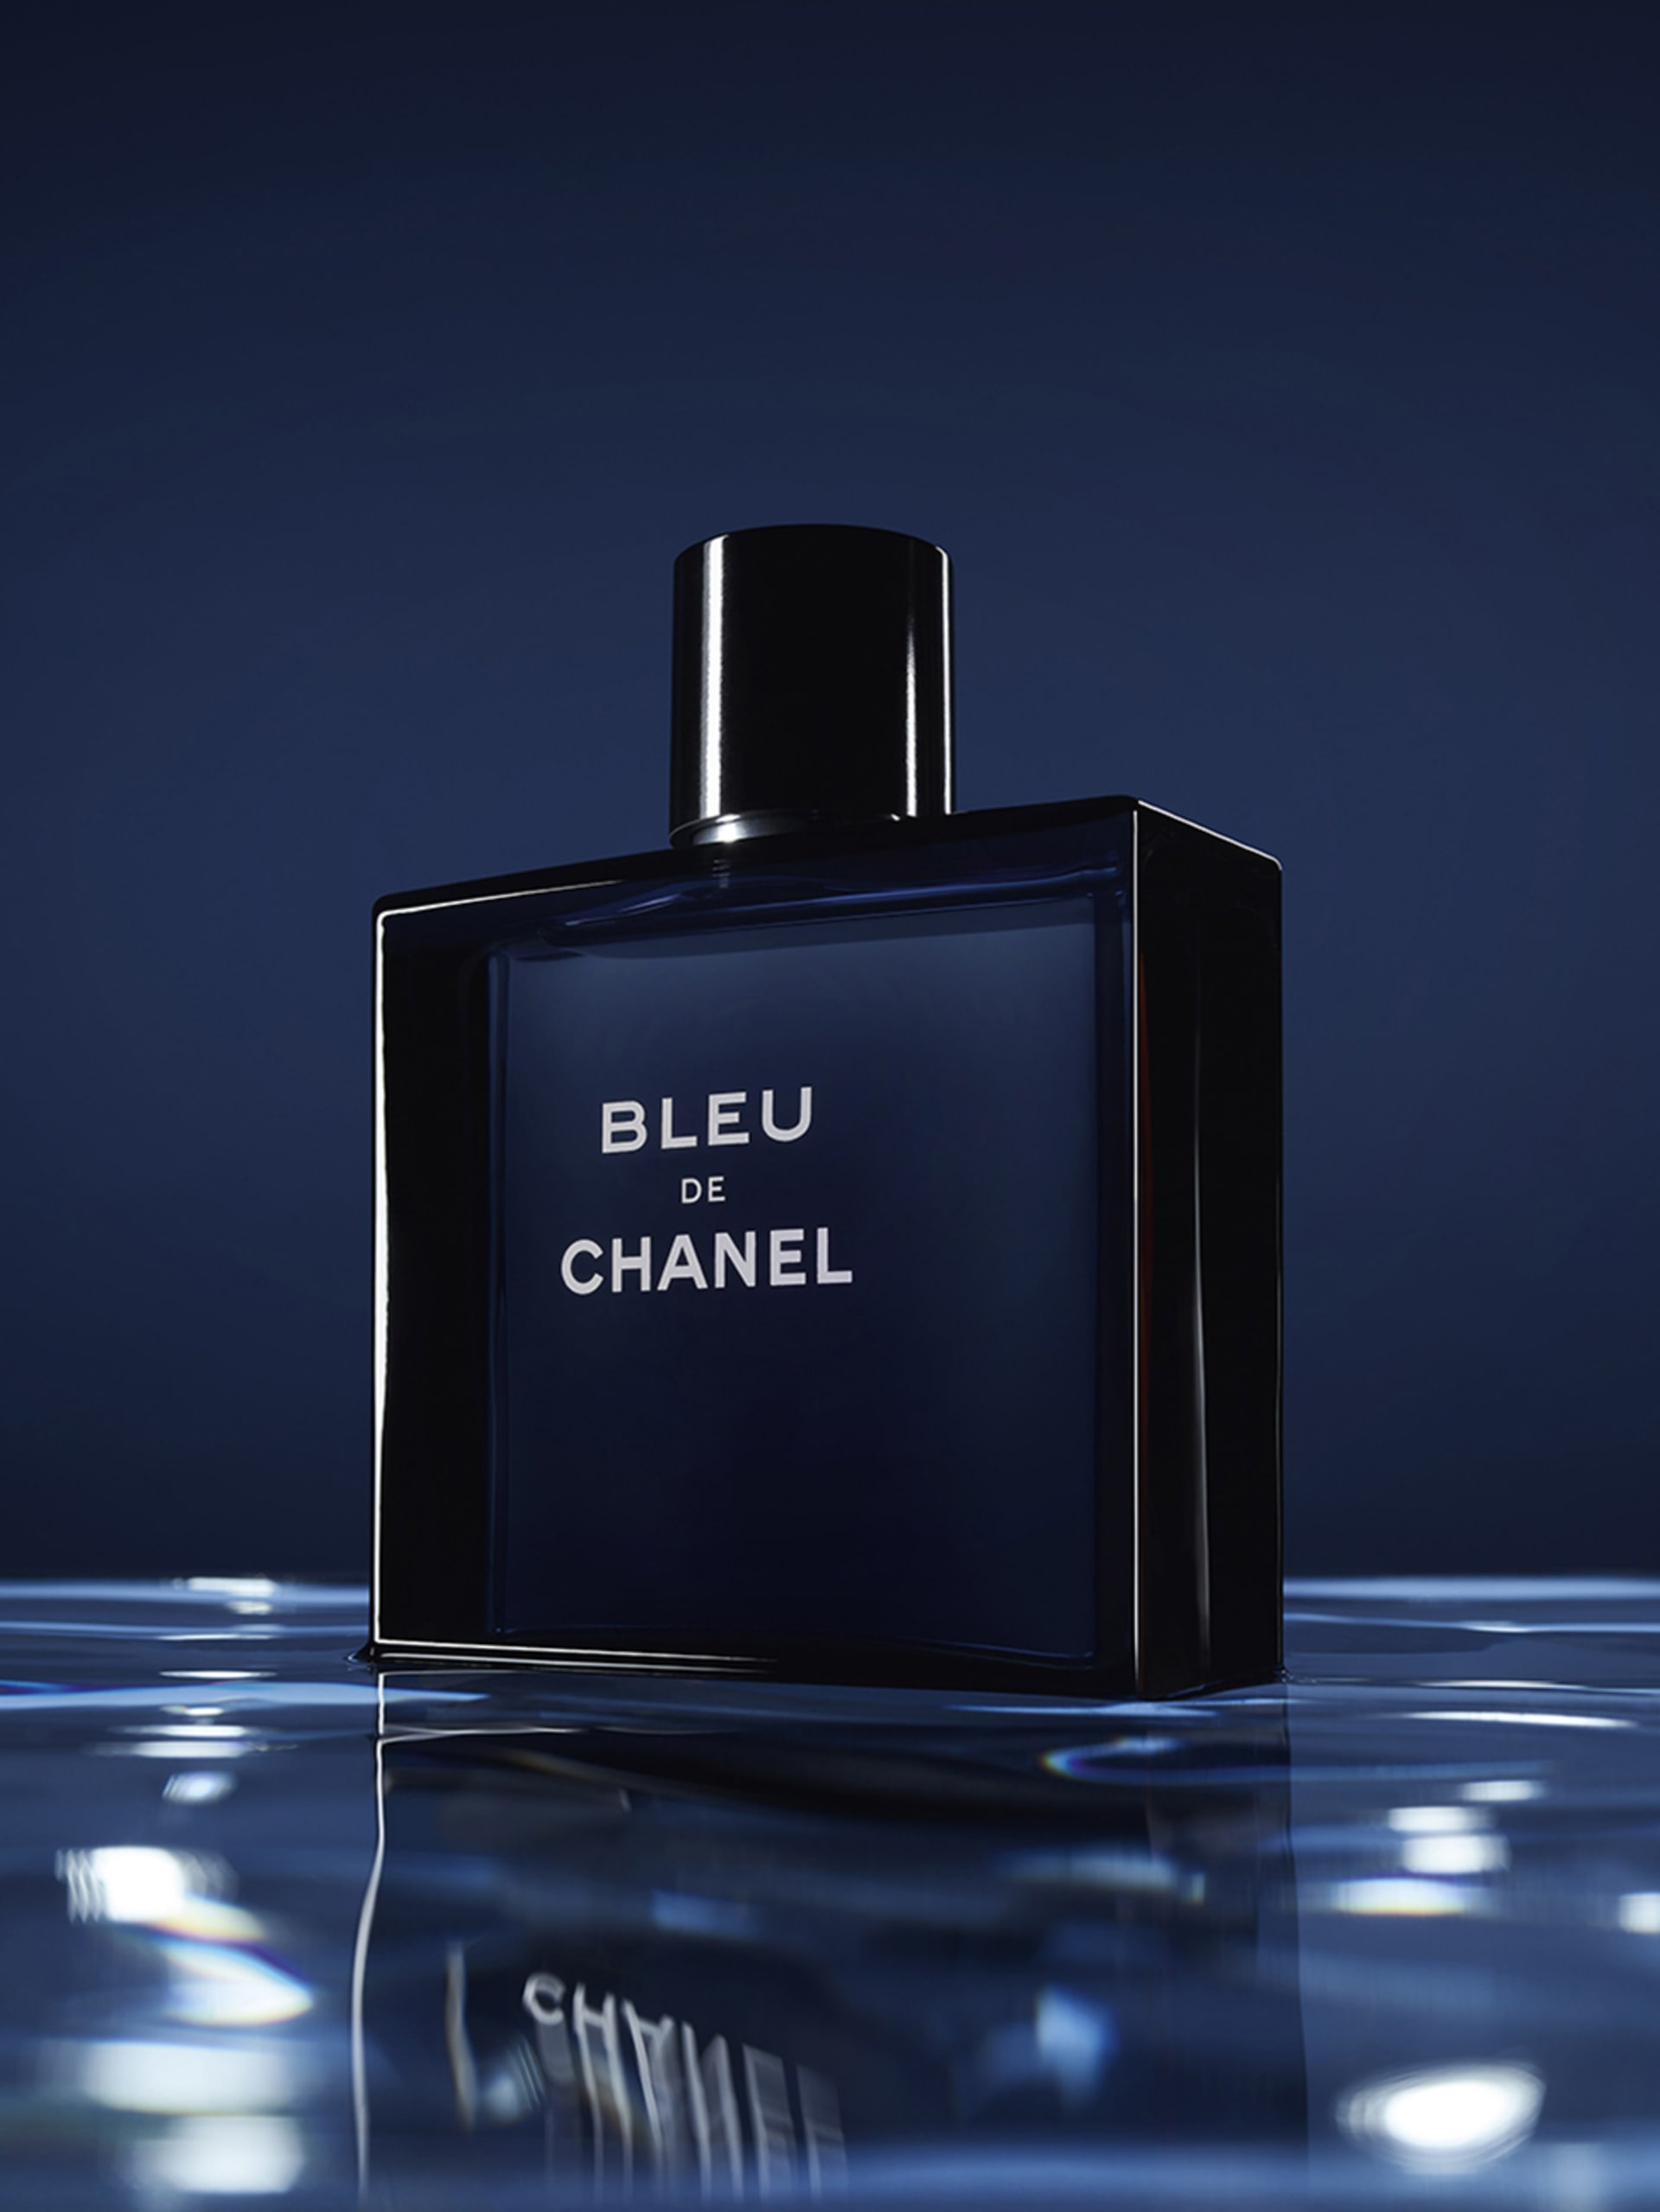 Chanel 香奈儿将于护肤线Le Lift 推出新款美容液Le Lift Serum和黑色|抗氧化|美容液|香奈儿_新浪新闻